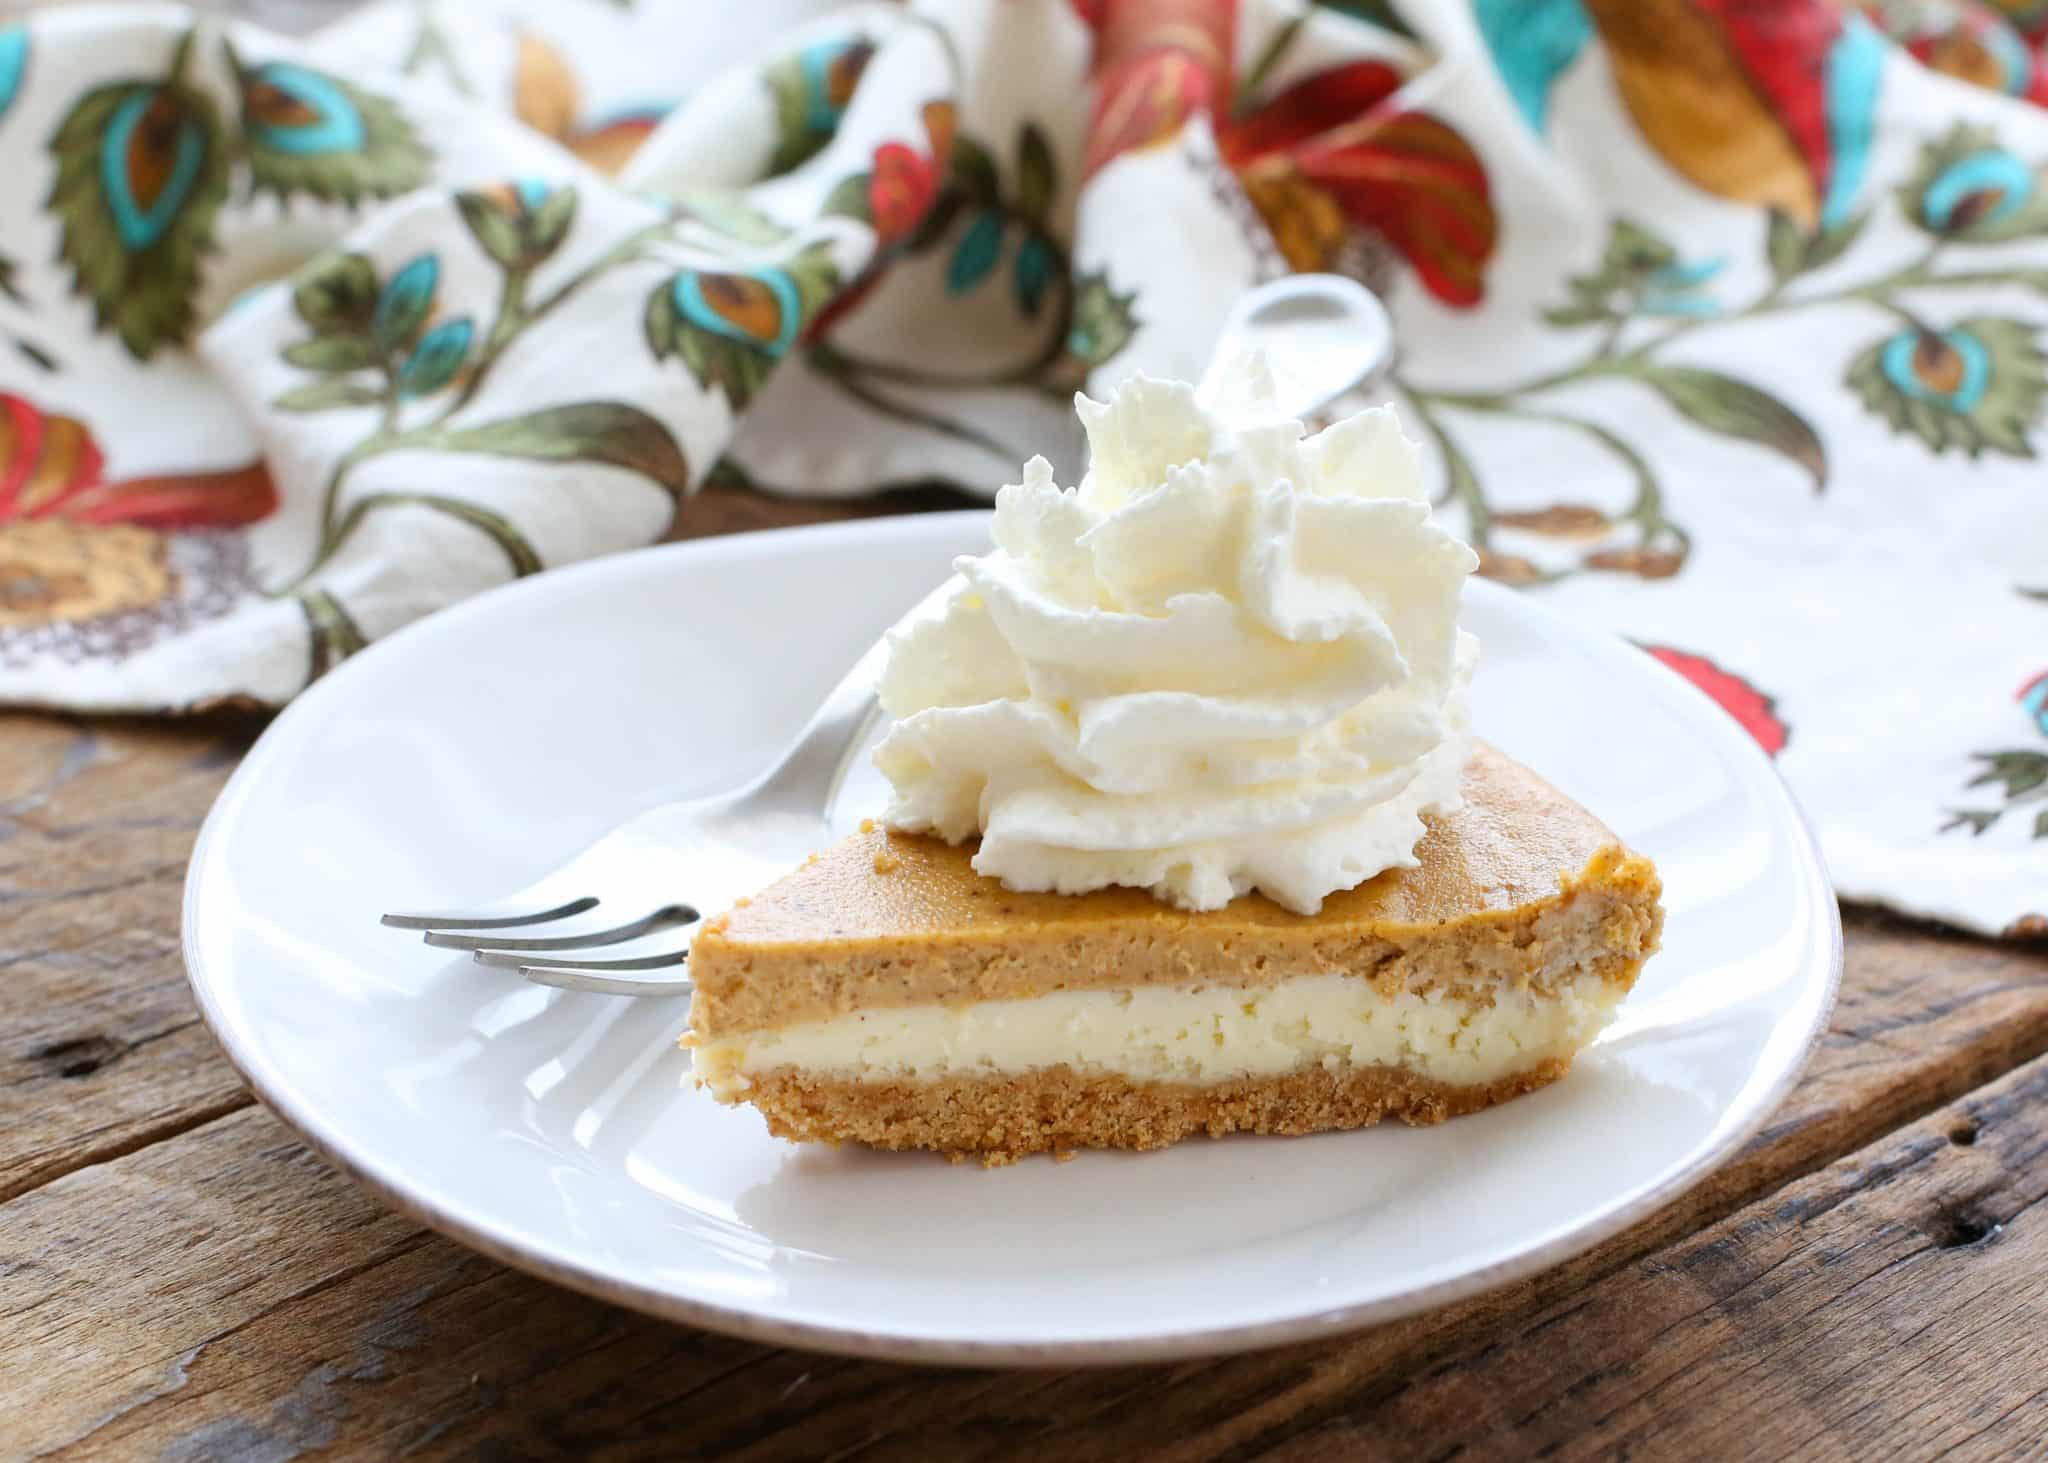 https://barefeetinthekitchen.com/wp-content/uploads/2013/10/Pumpkin-Cheesecake-Pie-4-1-of-1.jpg